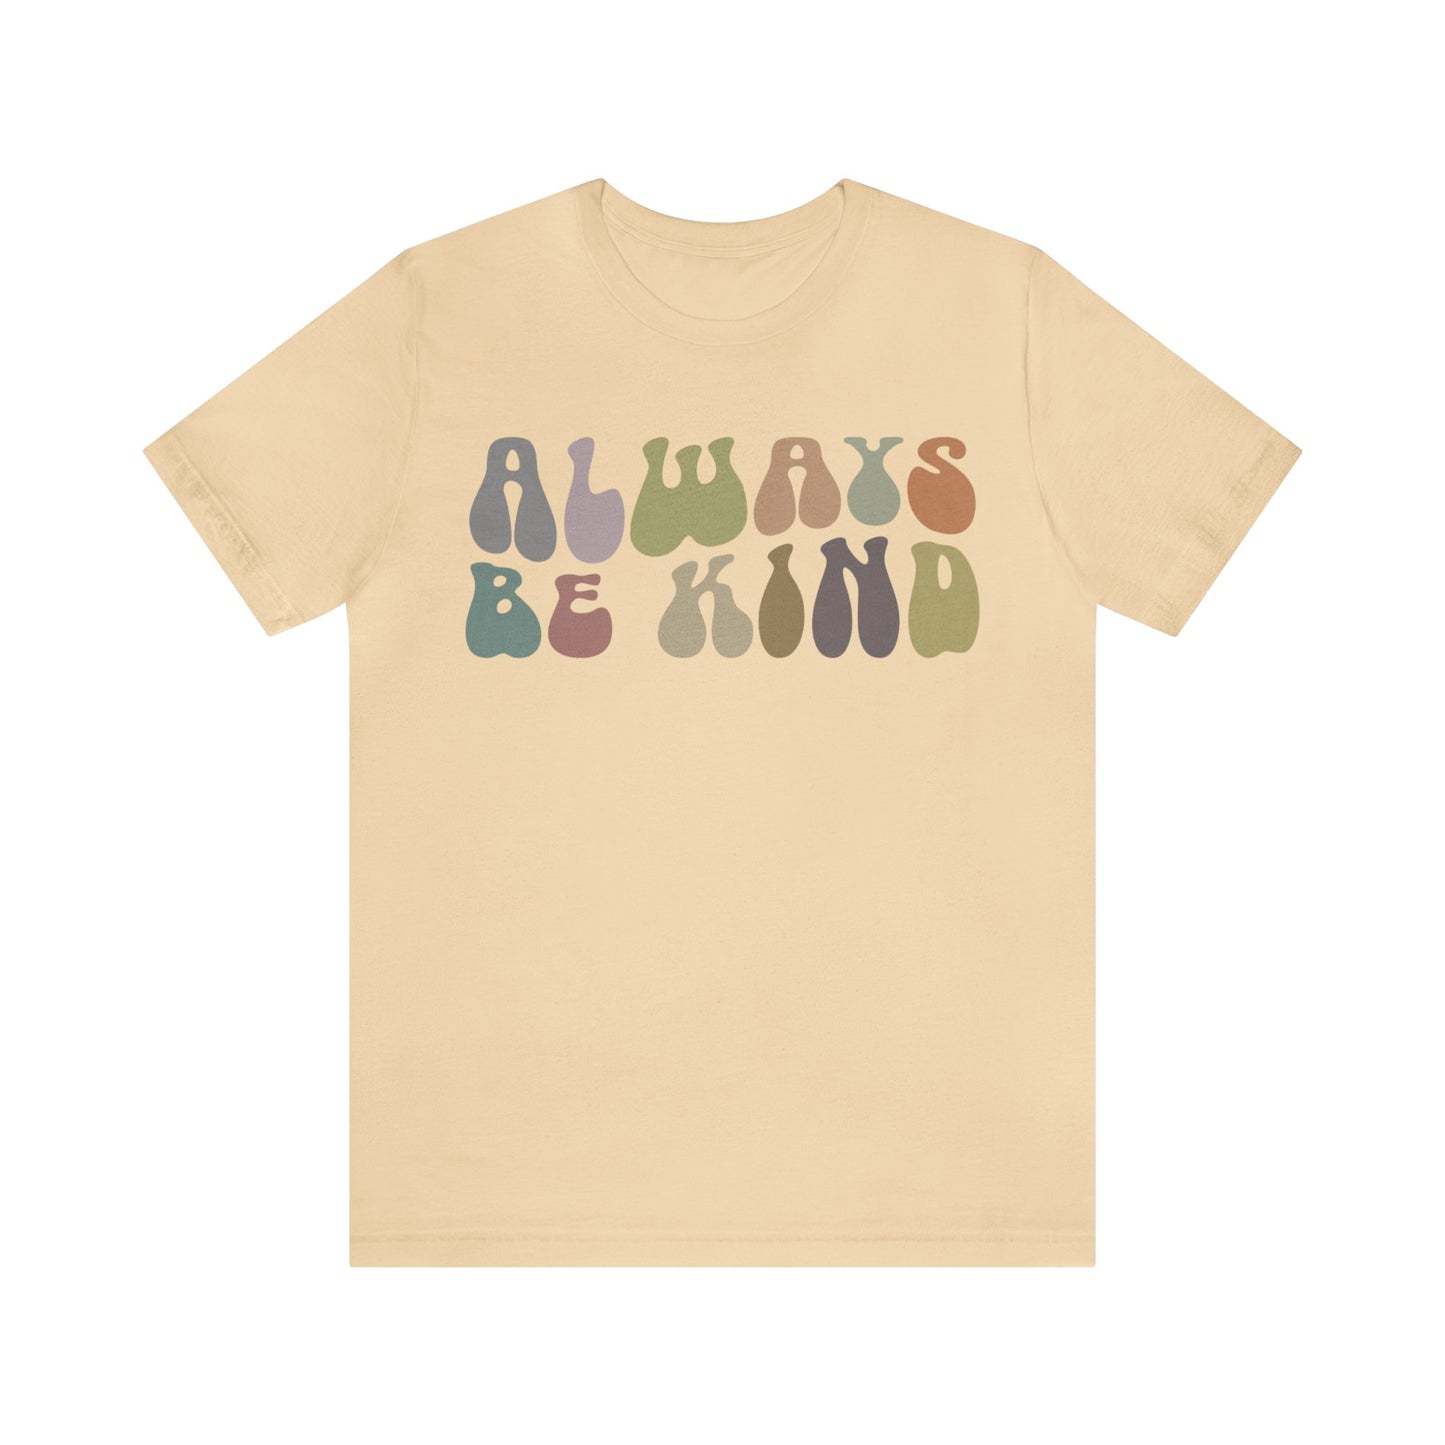 Always Be Kind Shirt, Positivity Shirt, Kind Mom Shirt, Be a Kind Human Shirt, Cute Inspirational Shirt, Kindness Shirt, T1371